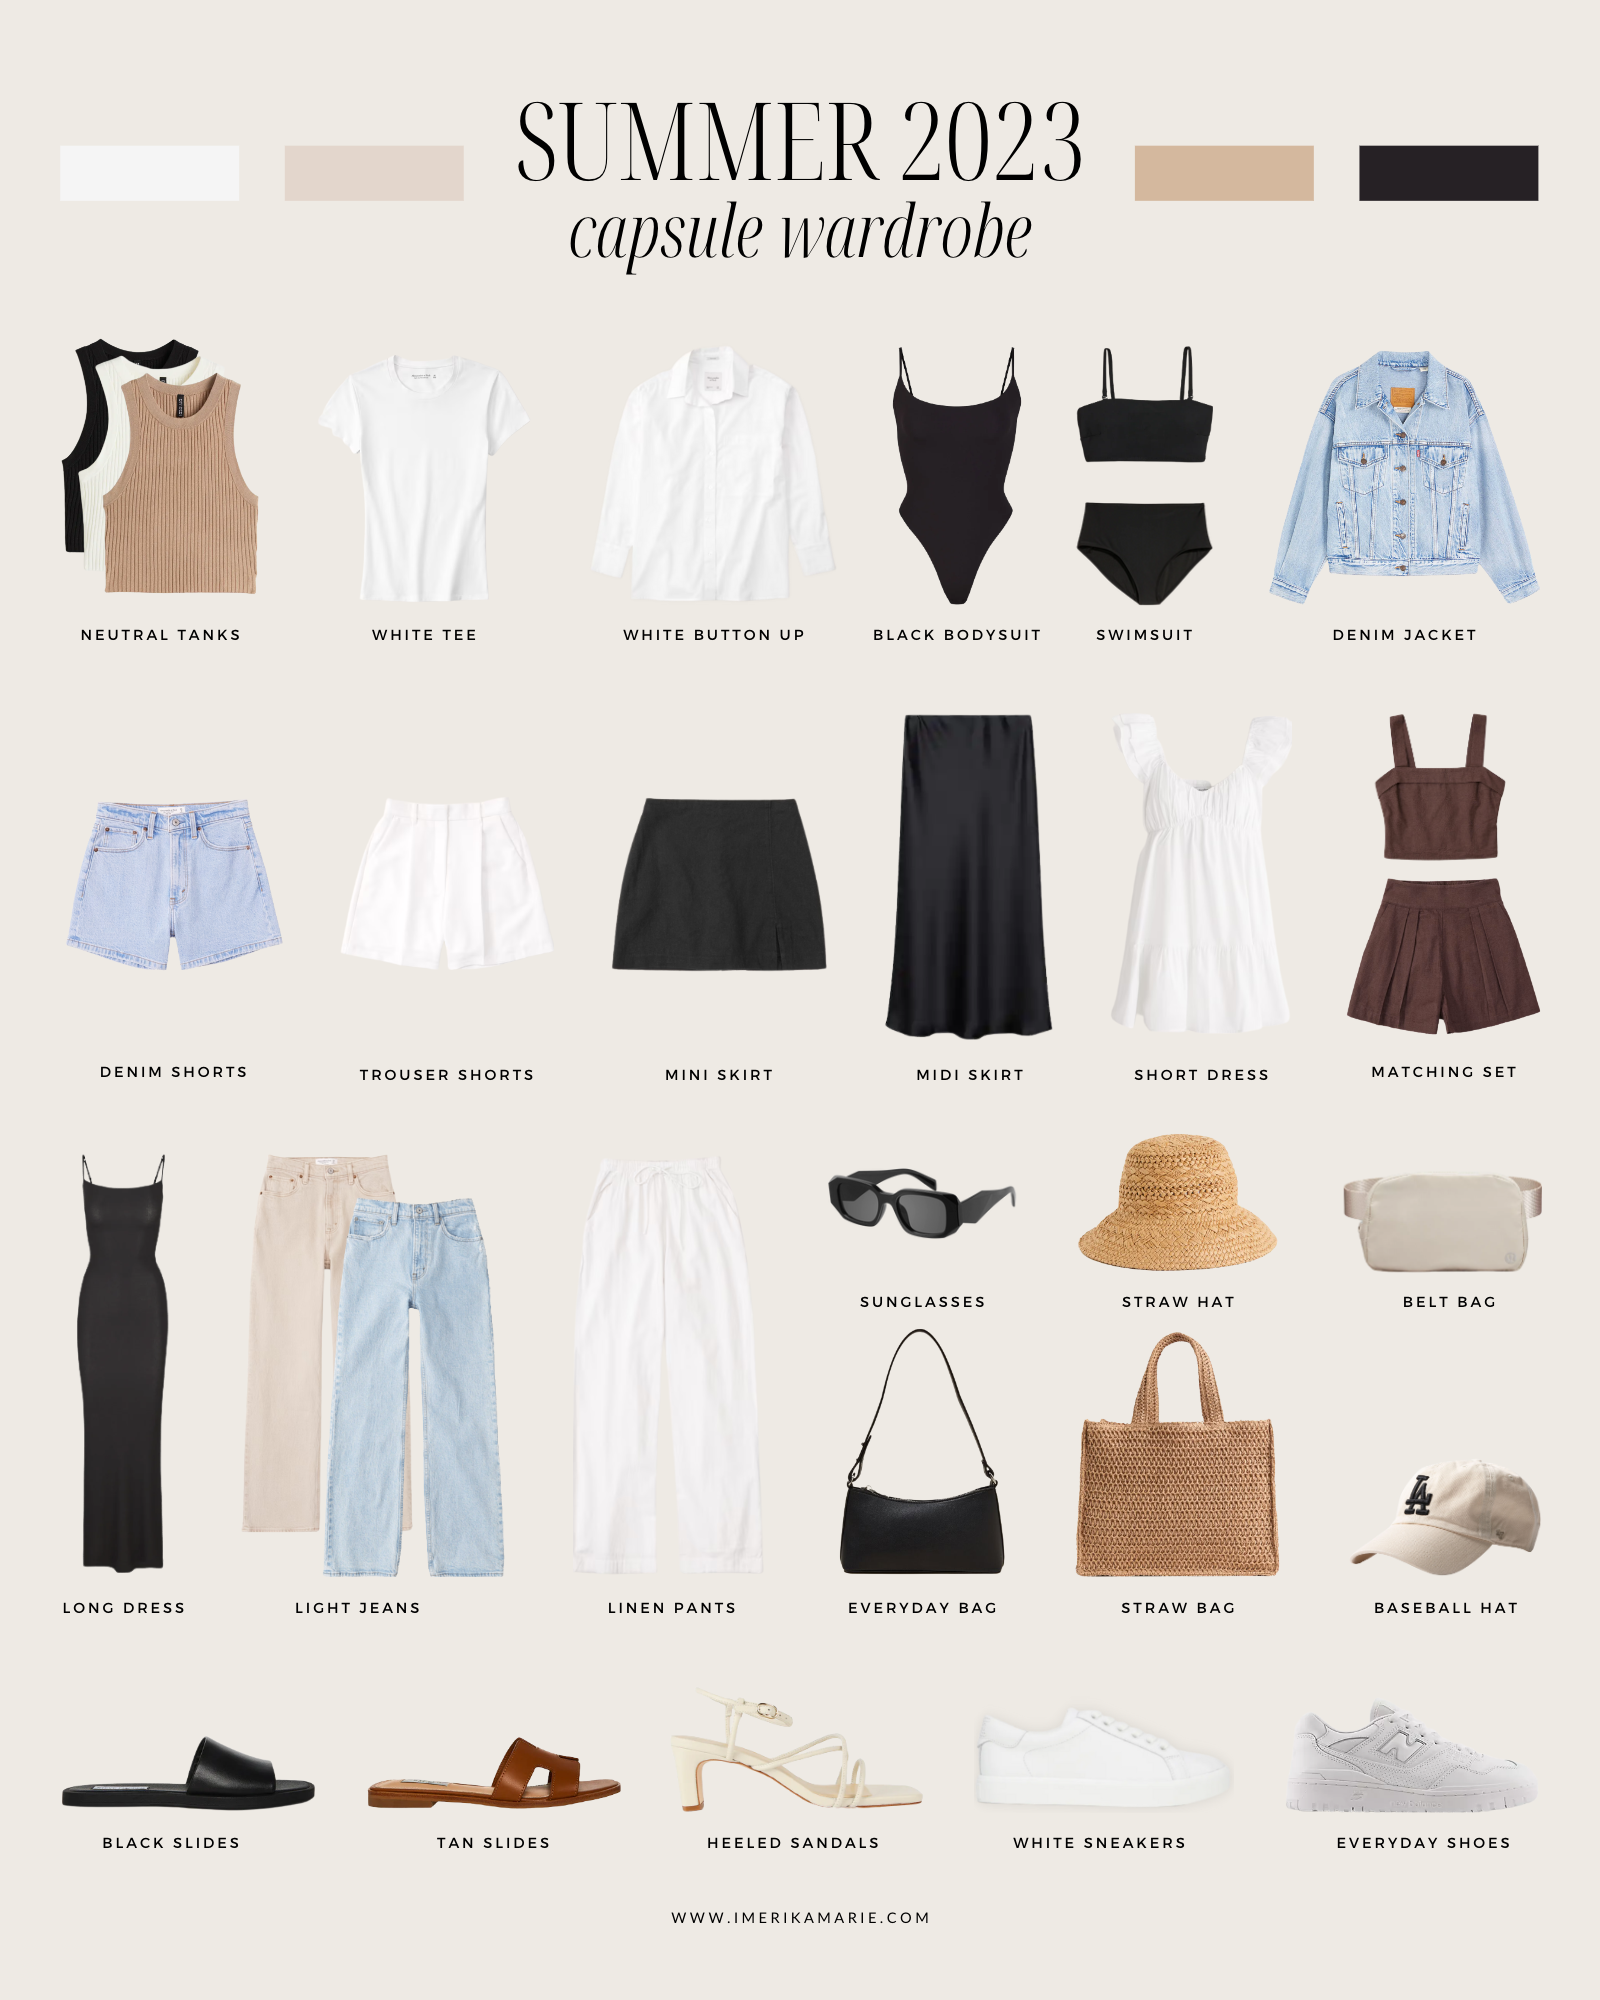 https://imerikamarie.com/wp-content/uploads/2023/05/Summer-2023-capsule-wardrobe.png